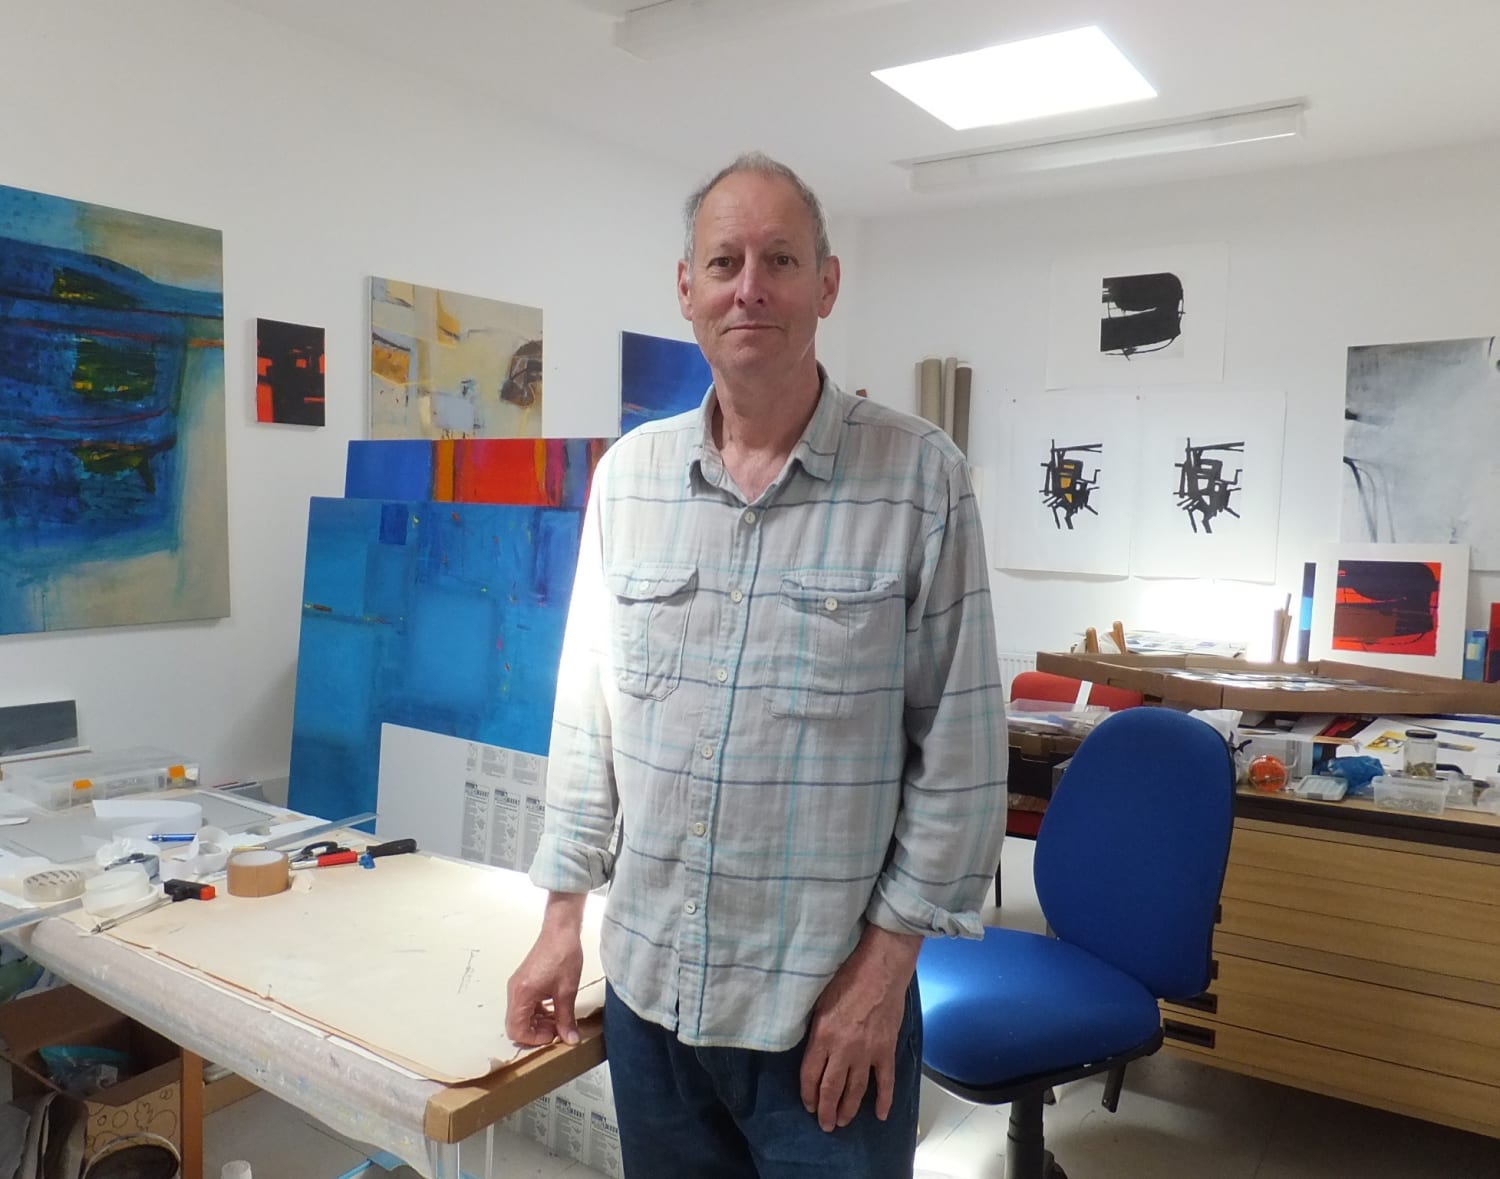 Meet the artist – Martyn Brewster